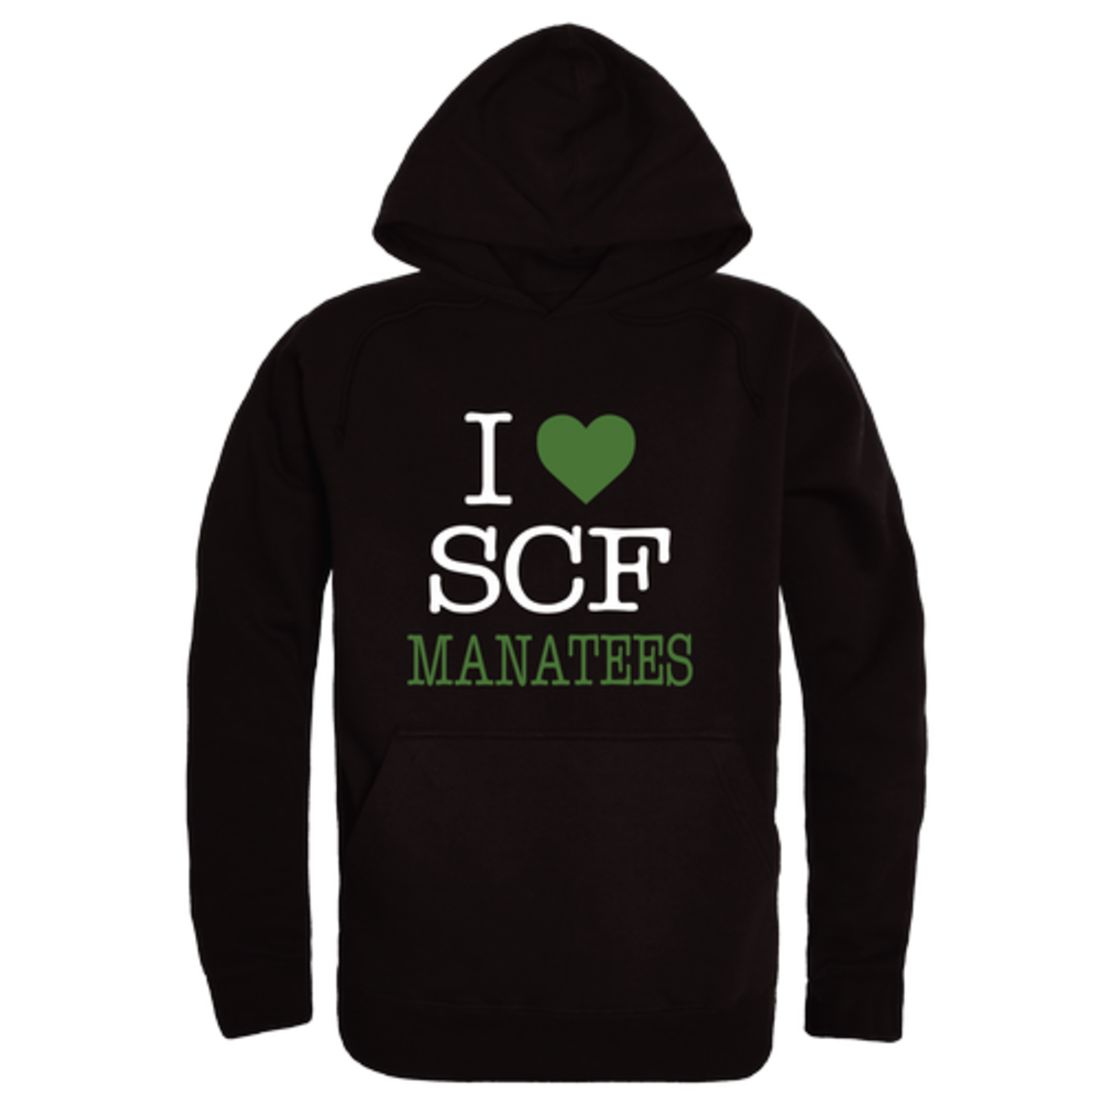 I-Love-State-College-of-Florida-Manatees-Fleece-Hoodie-Sweatshirts